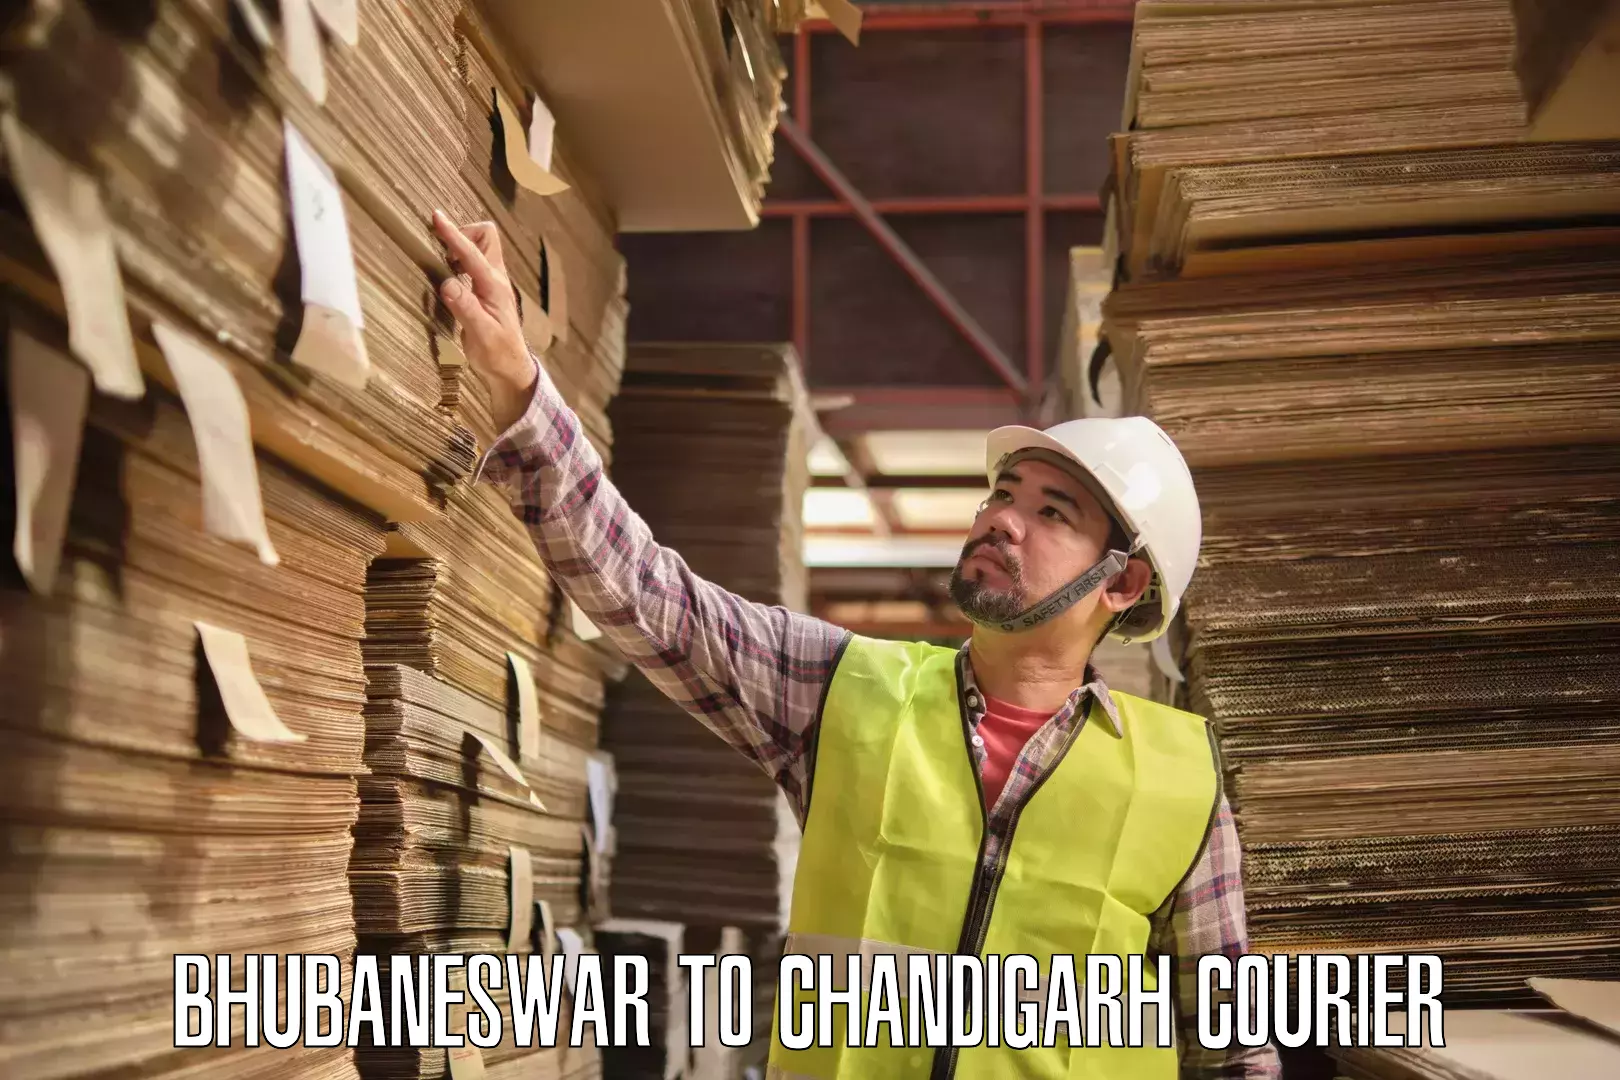 Supply chain delivery Bhubaneswar to Chandigarh